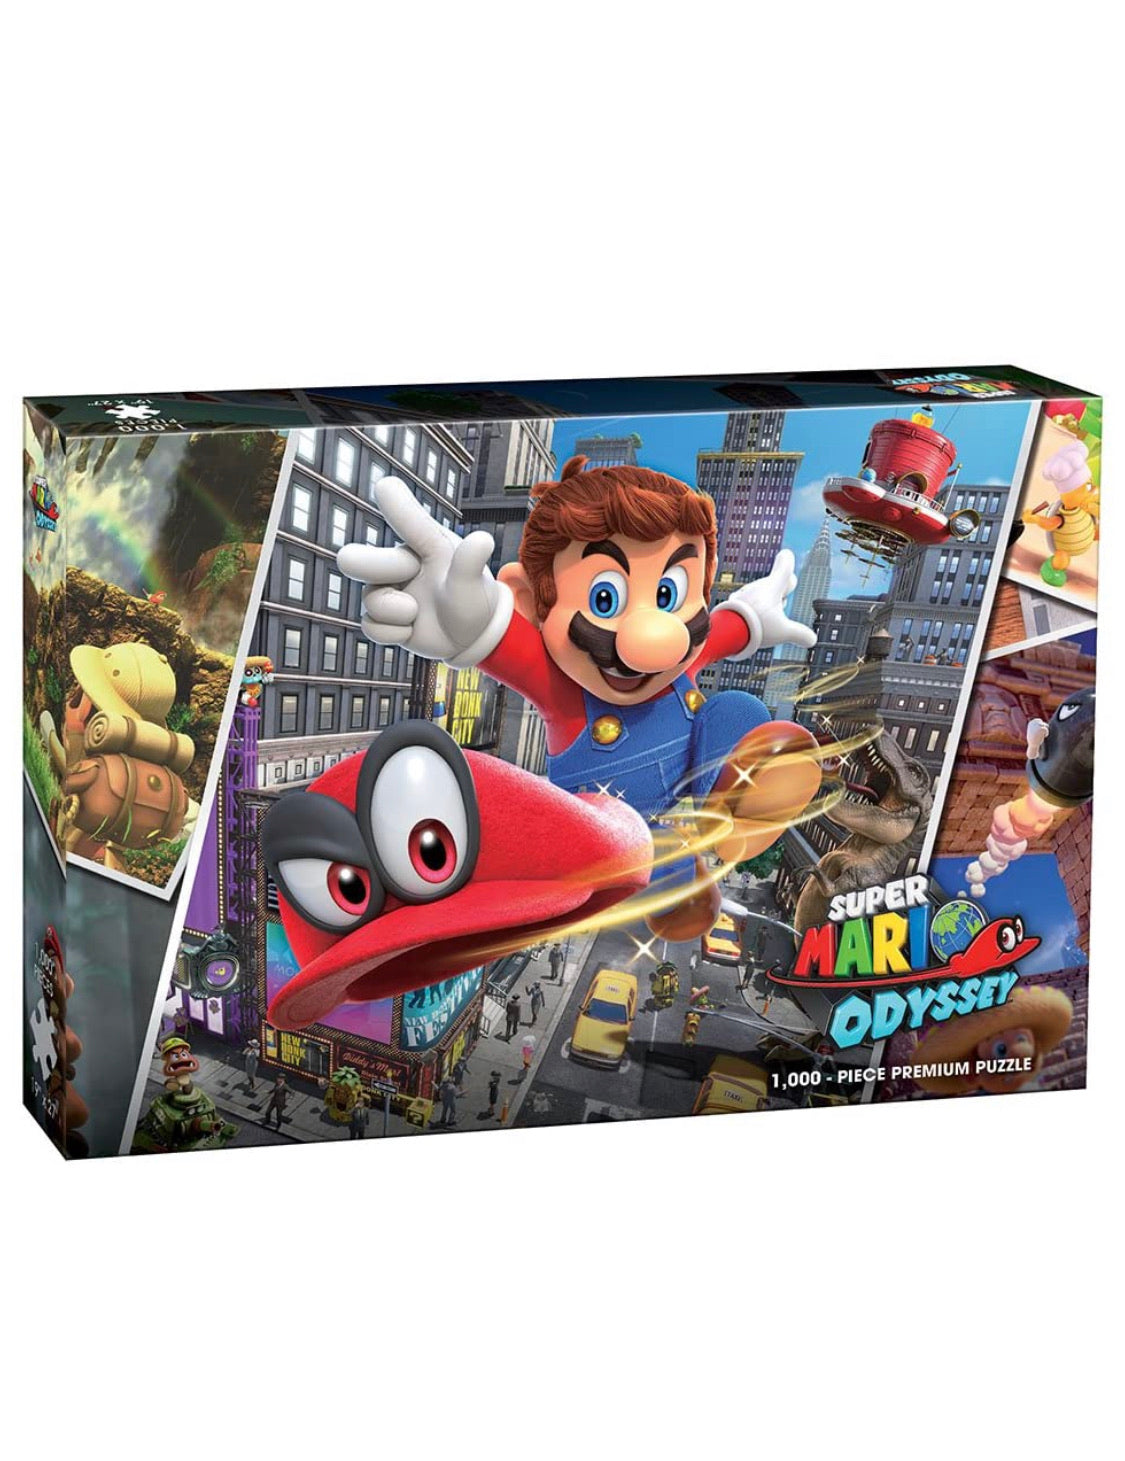 Mario Odyssey 1000 pc Puzzle